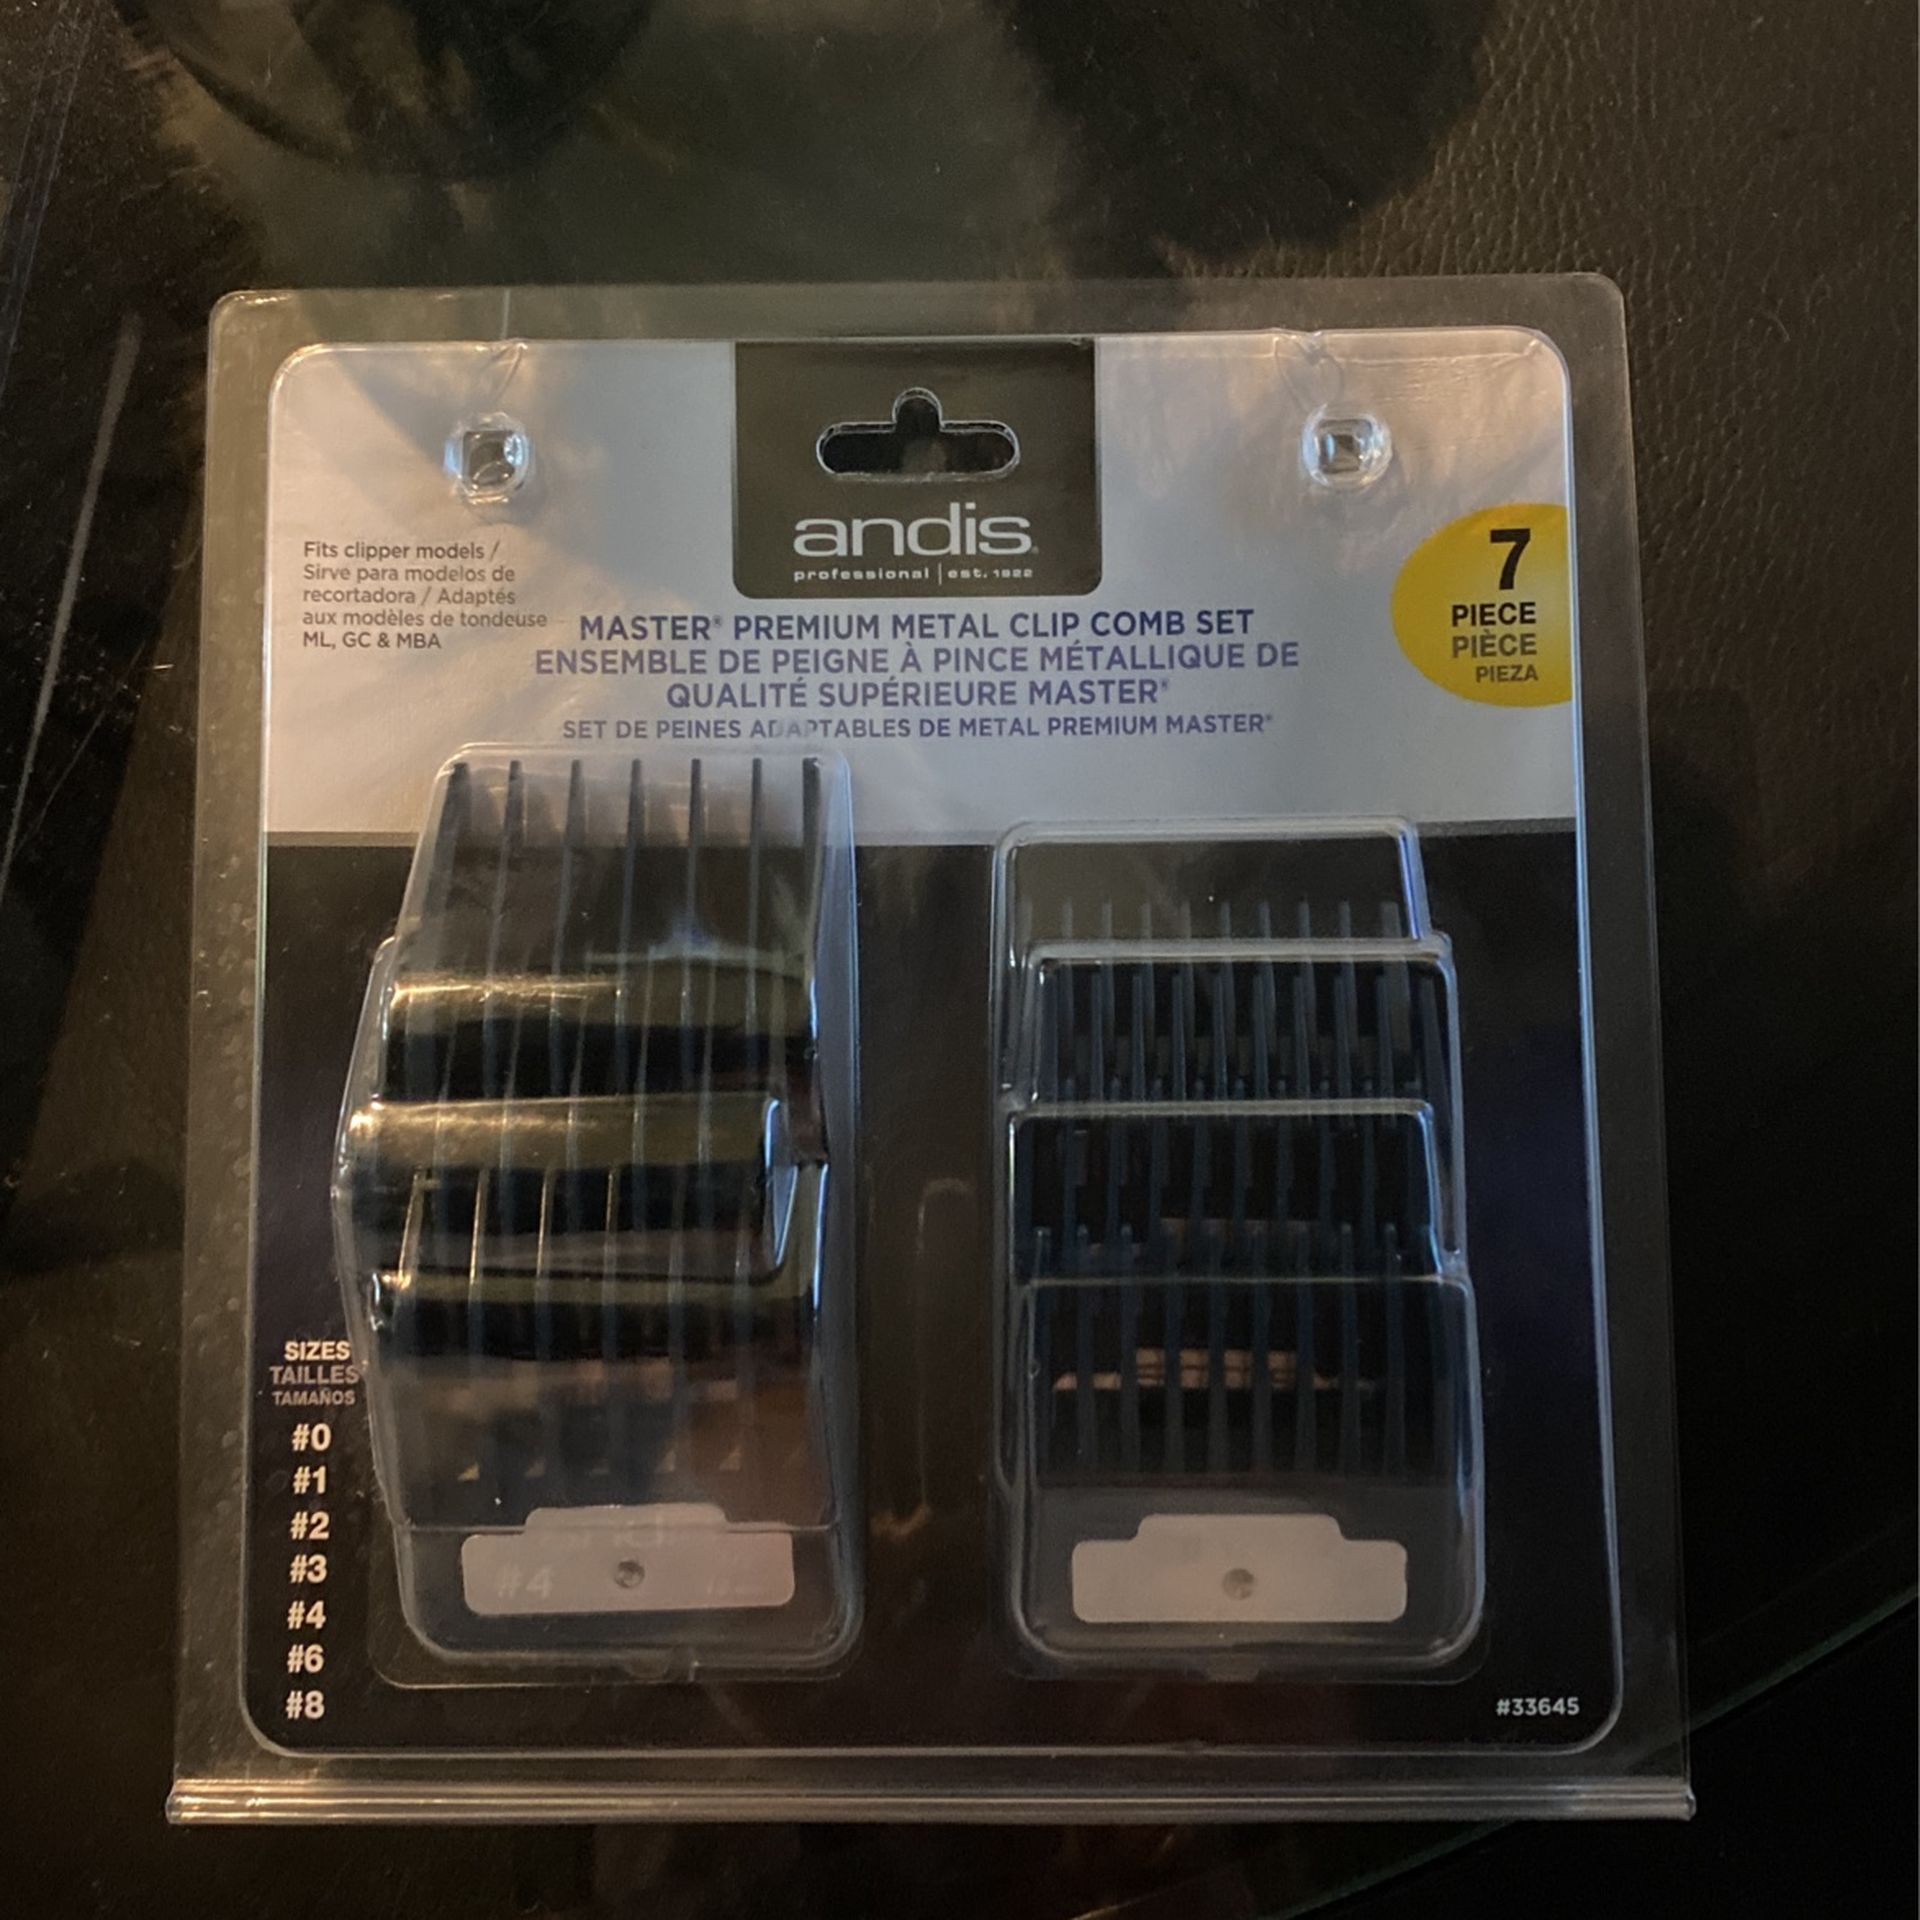 Máster Premium Metal Clíp Comb Set